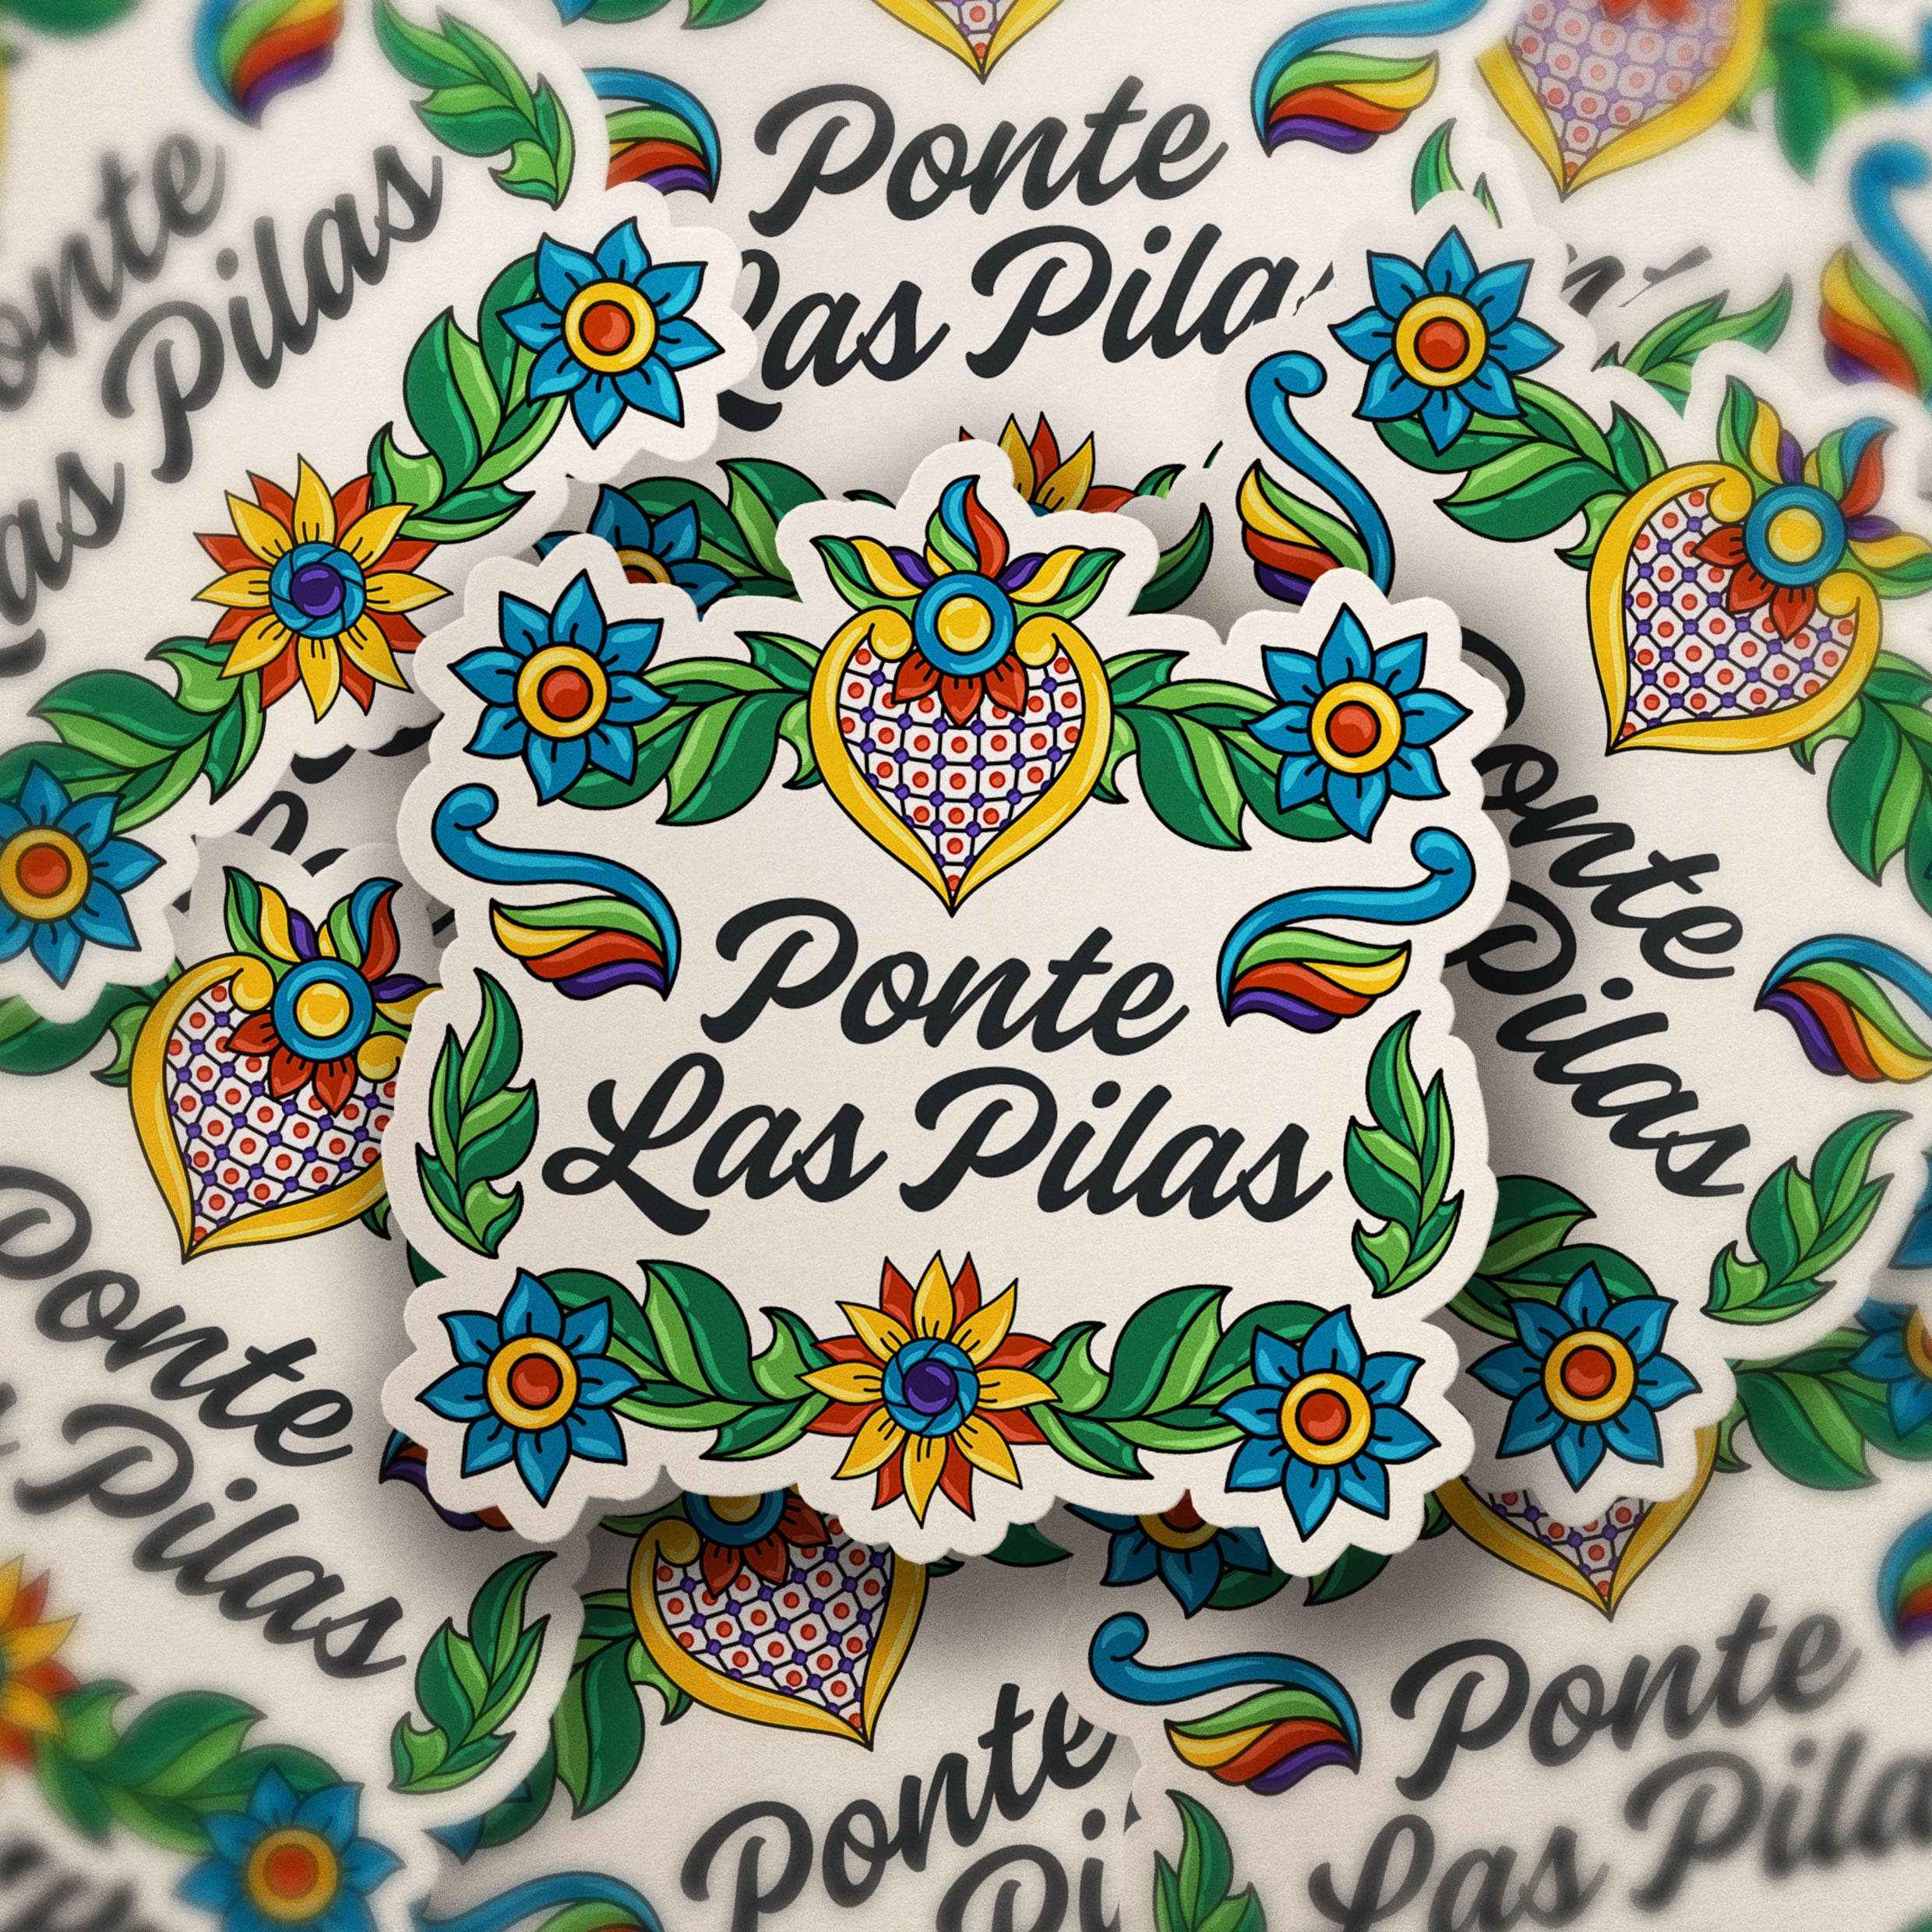 Ponte Las Pilas Sticker